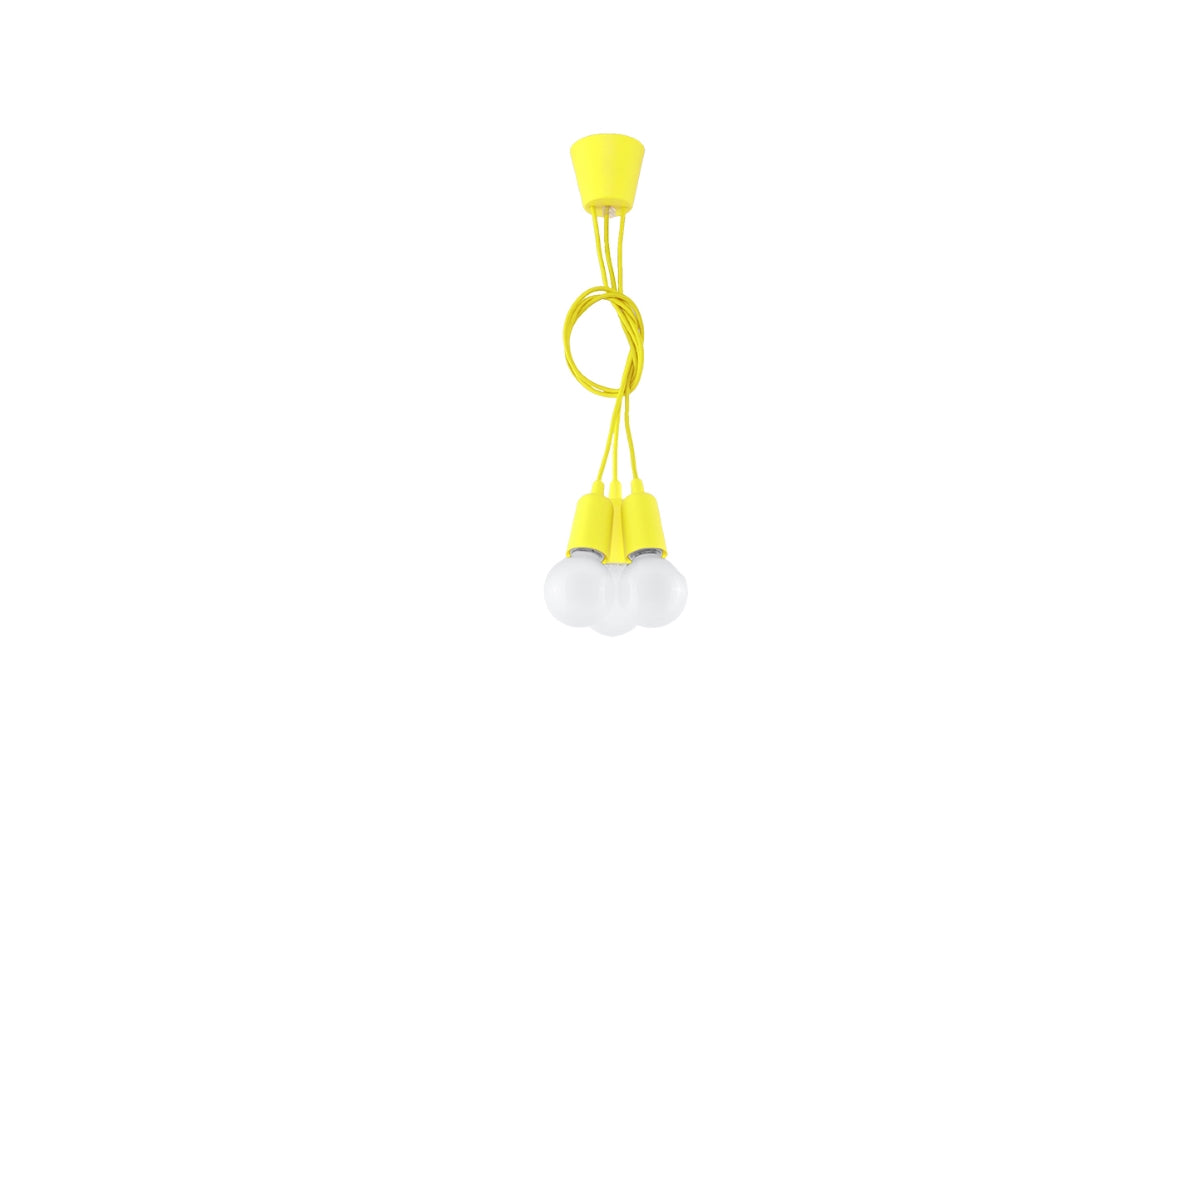 hanglamp-diego-3-geel